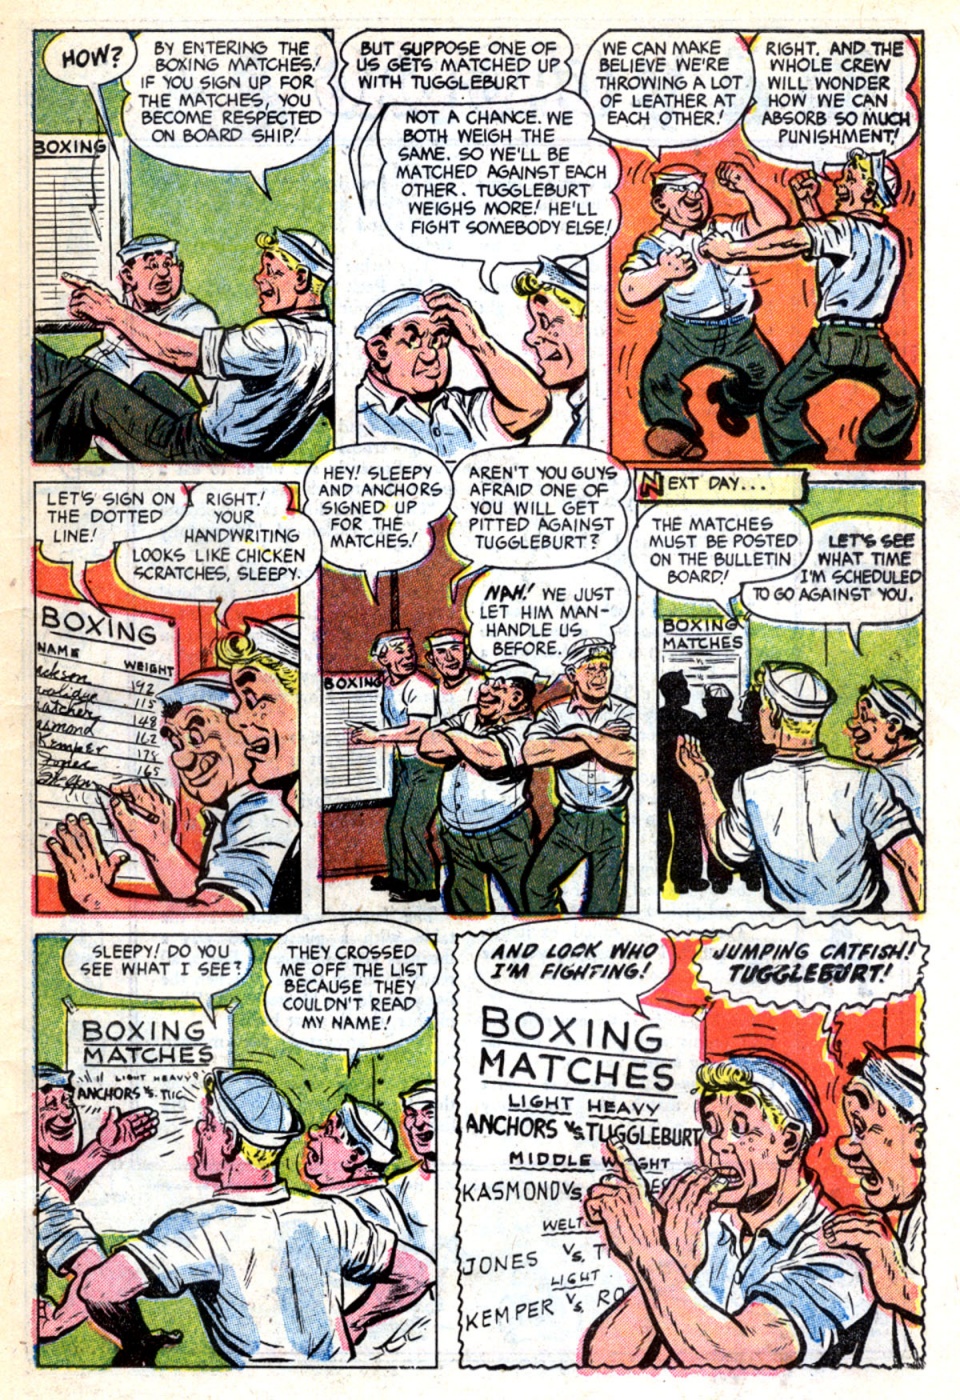 Anchors the Salt Water Daffy - Comics (11)